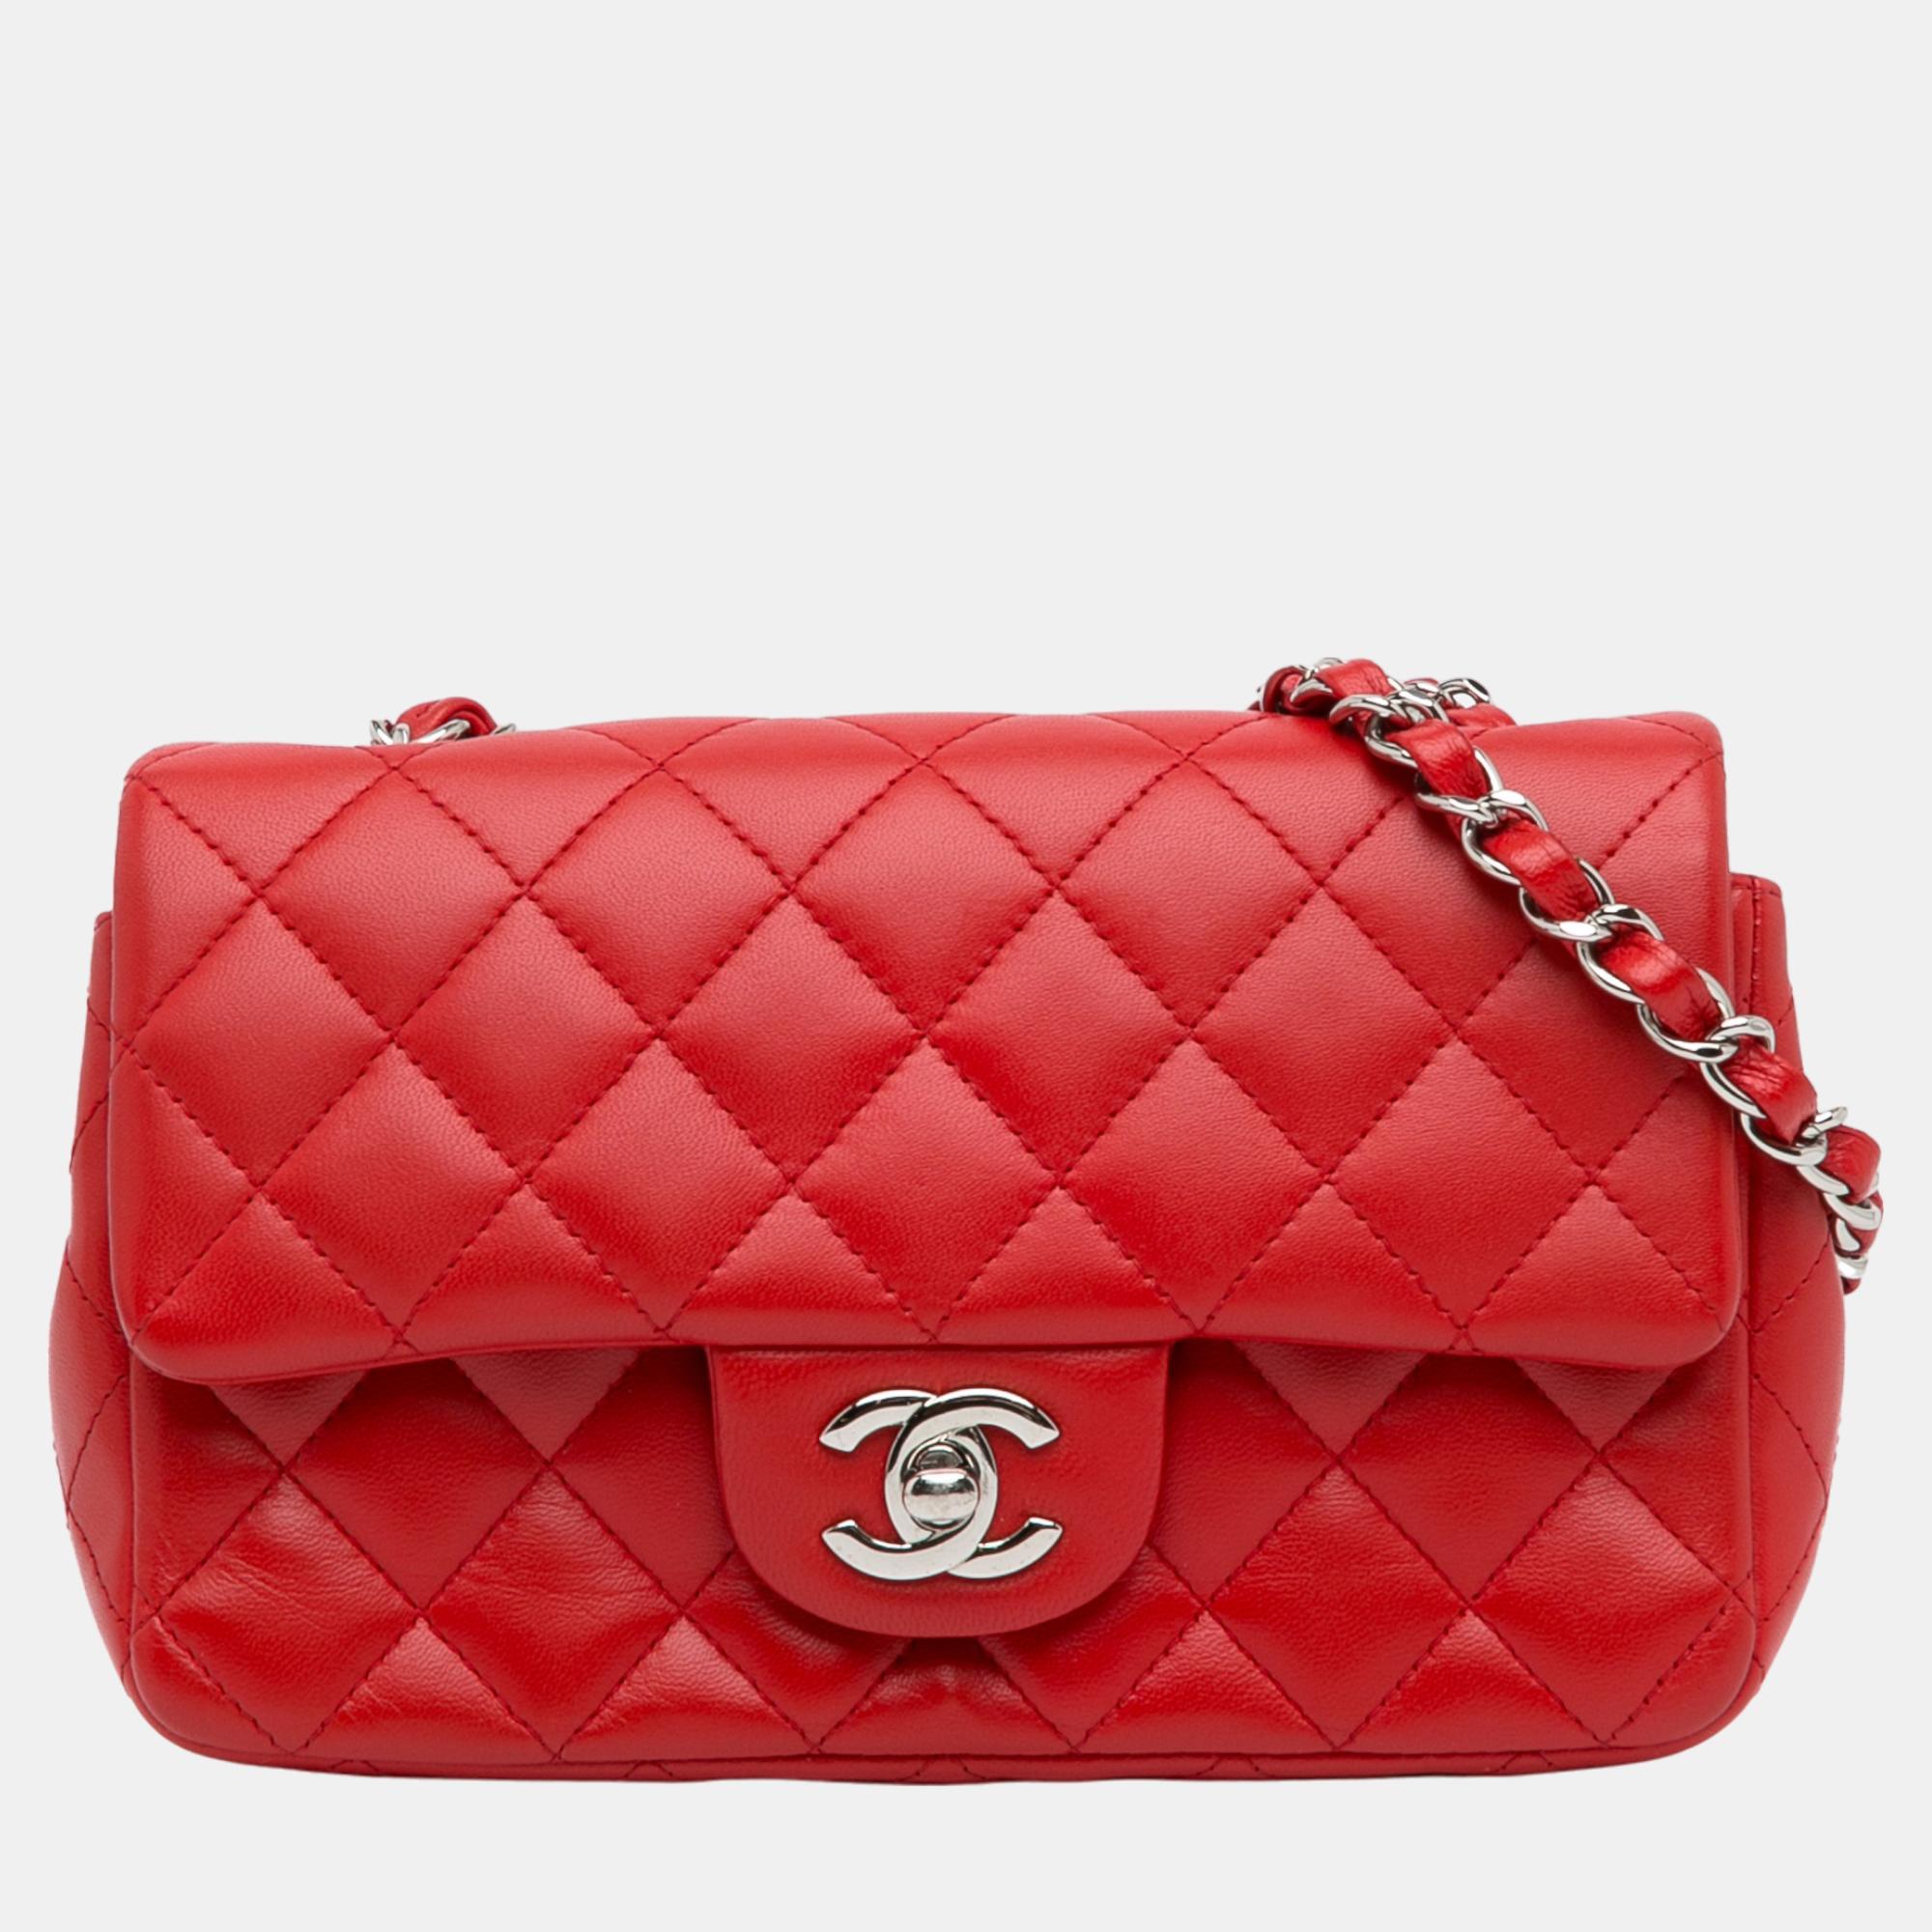 Chanel red mini rectangular classic lambskin single flap